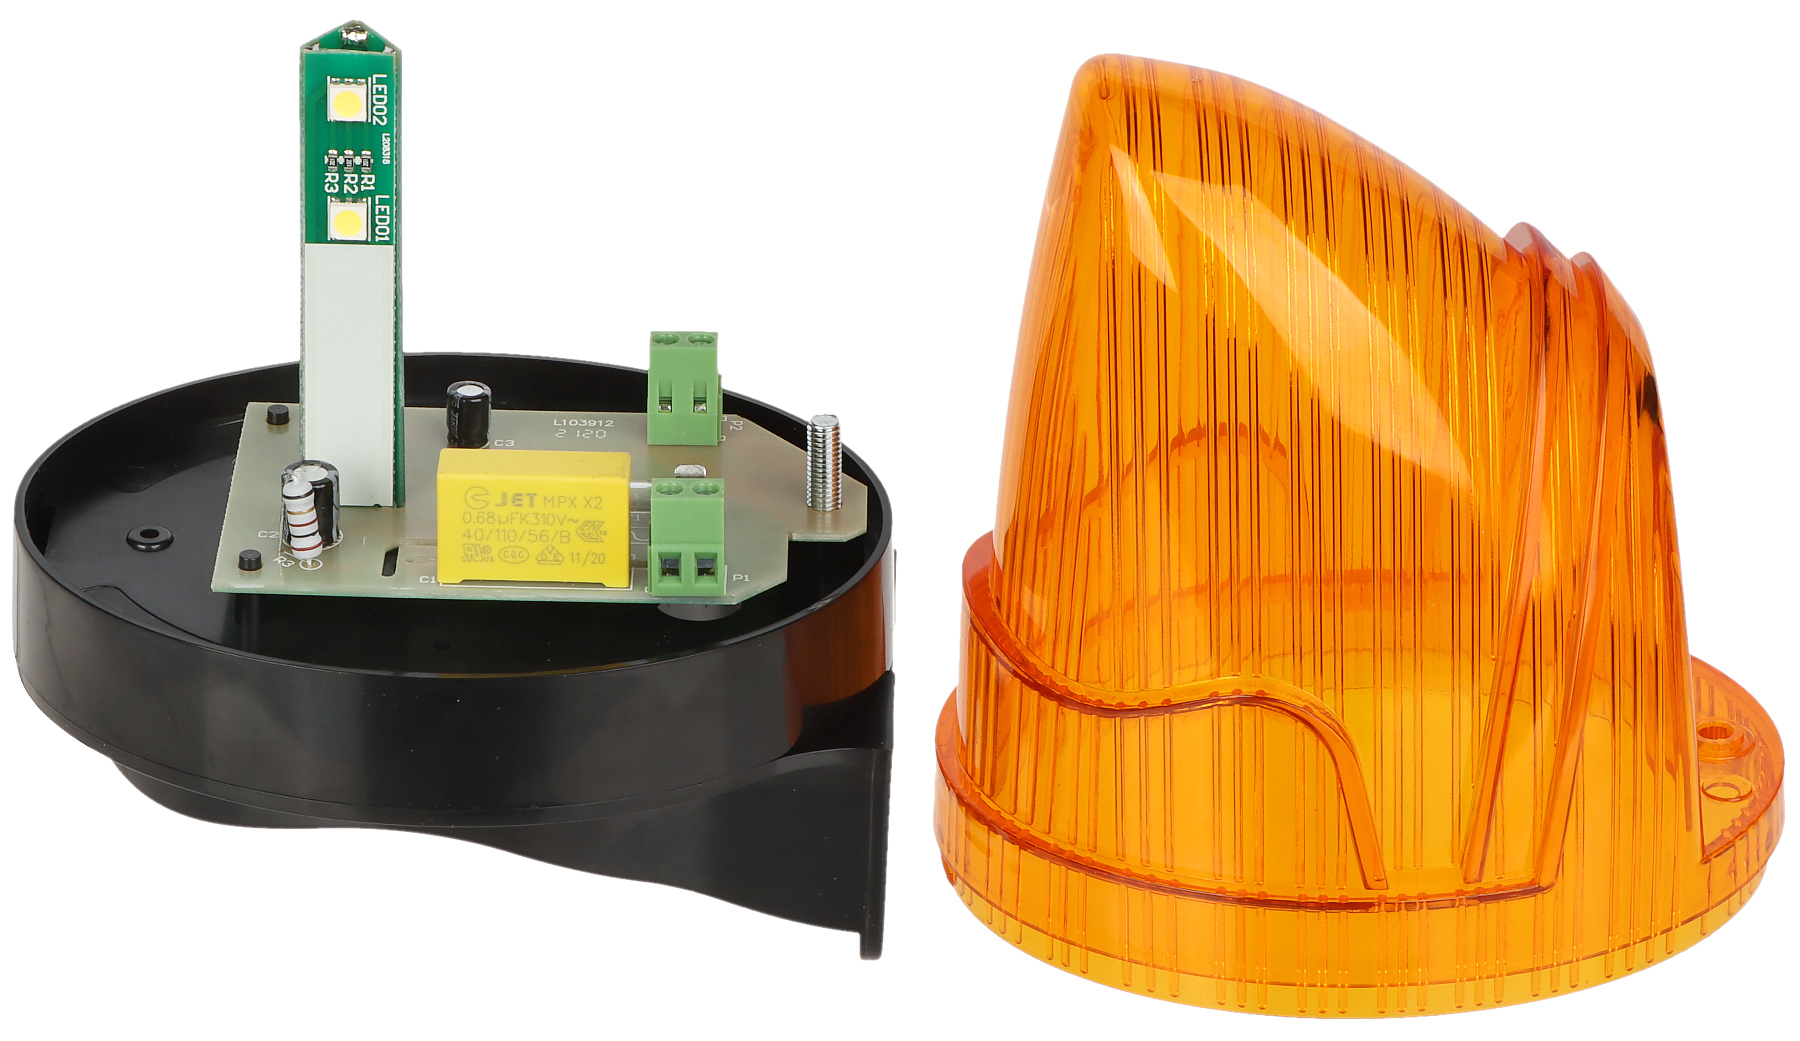 Ganganzeige mit integriertem Shift-Light - Lazer Lamps, Viper